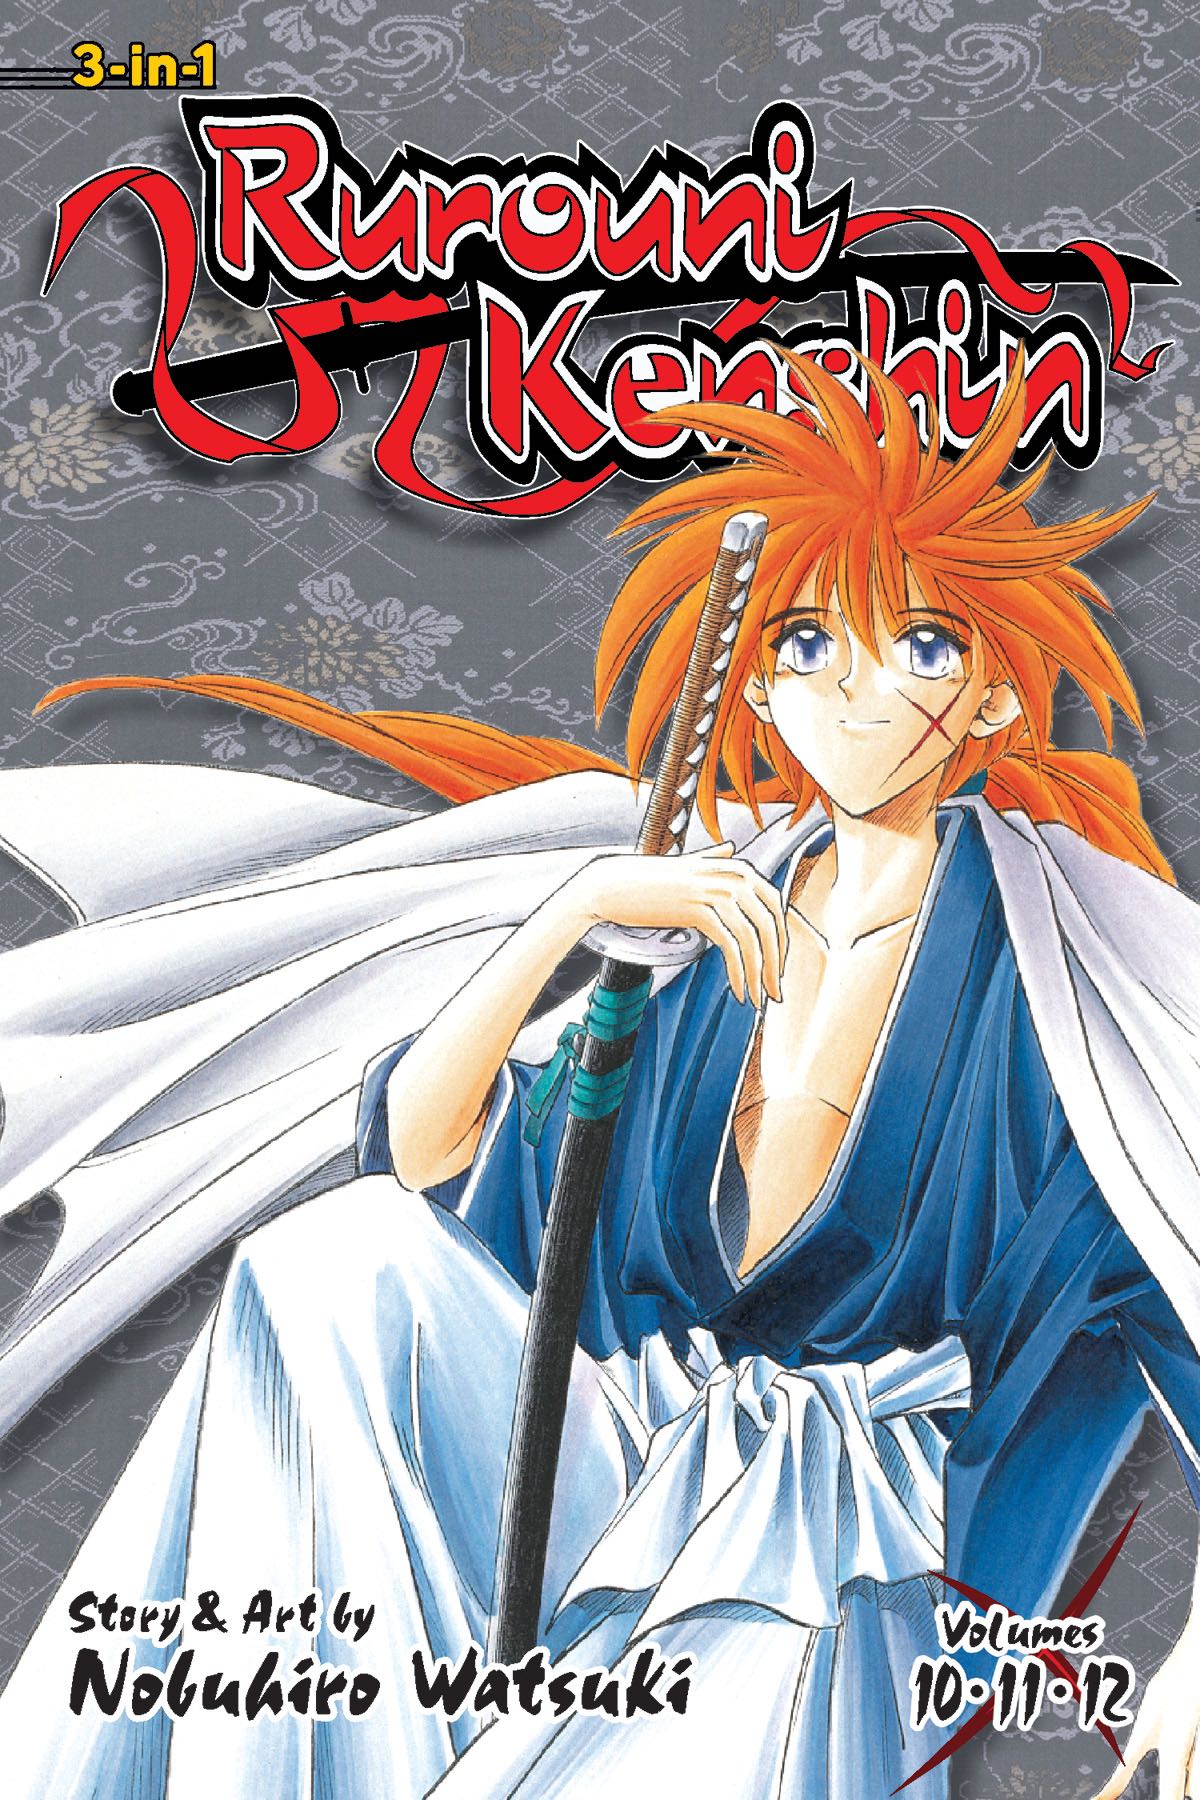  Rurouni  Kenshin  Vol 4 3 in 1 Edition Fresh Comics